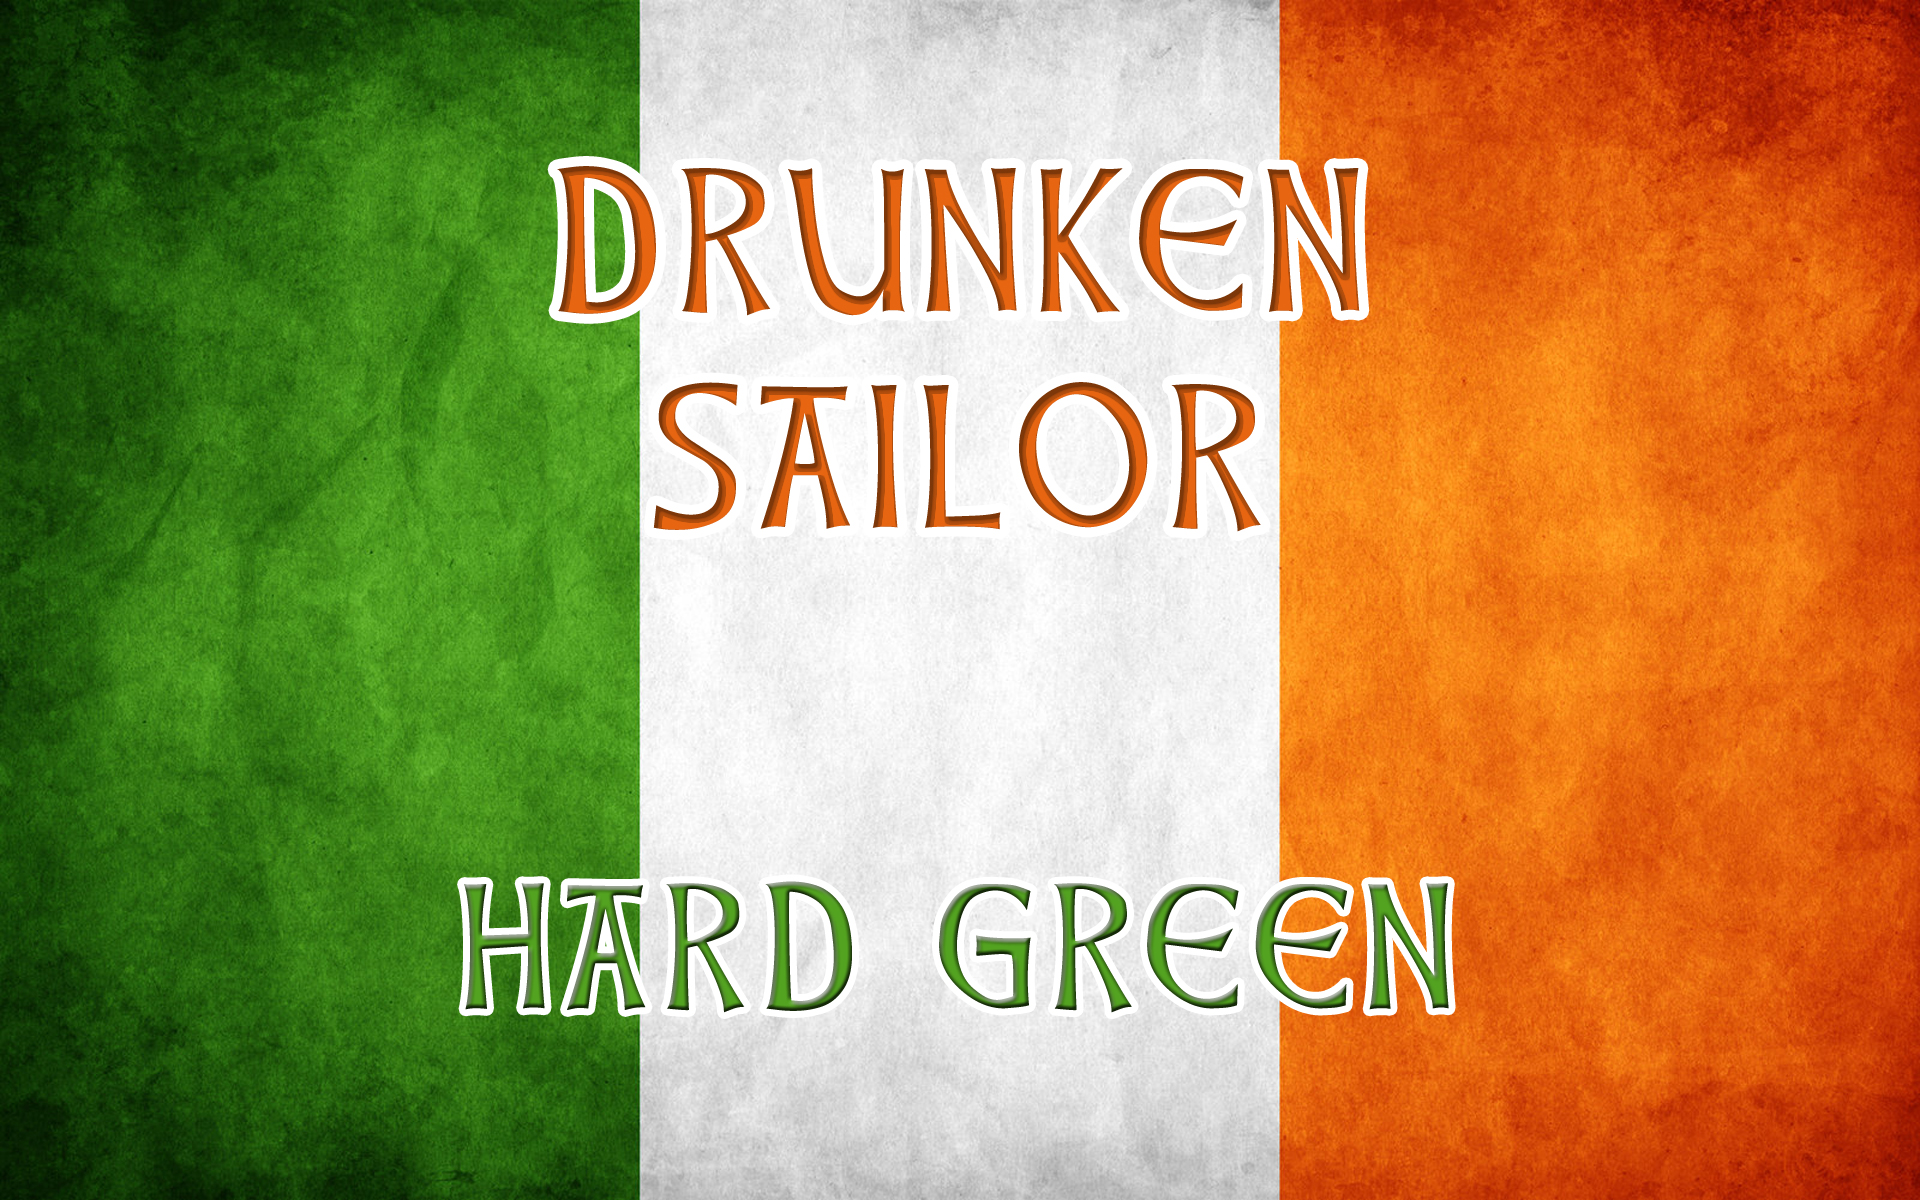 Drunken sailor - Irish drinking music - Hard Green